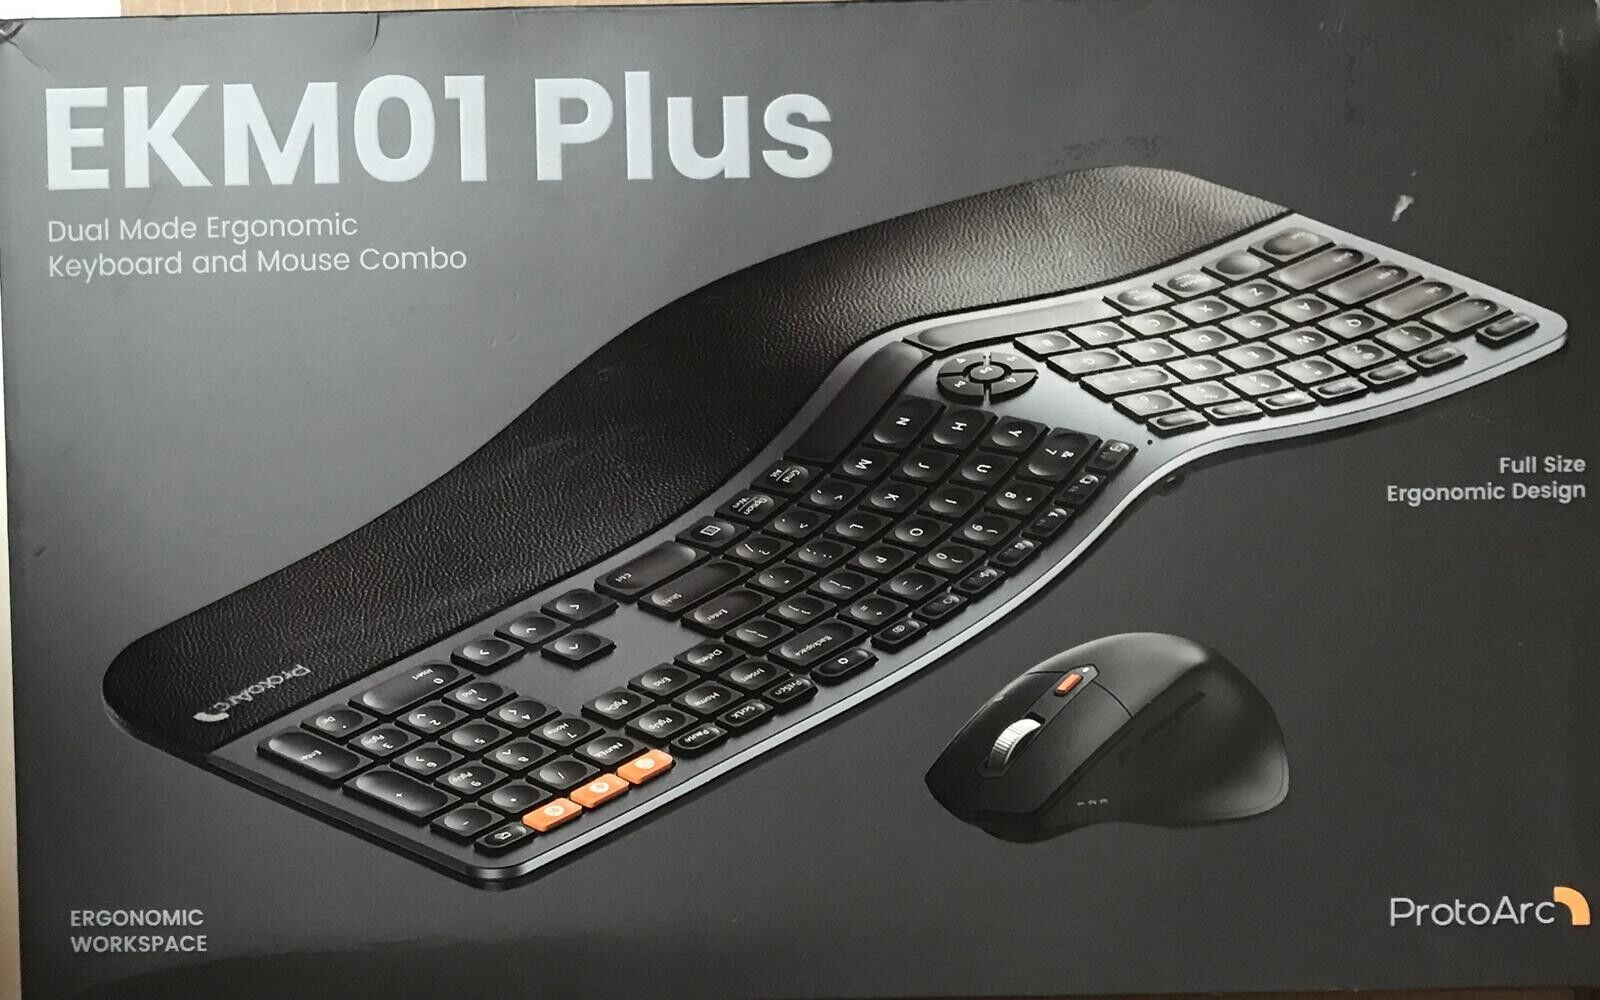 Ergonomic Wireless Keyboard Mouse, ProtoArc EKM01 Plus Full Size Ergo Bluetooth